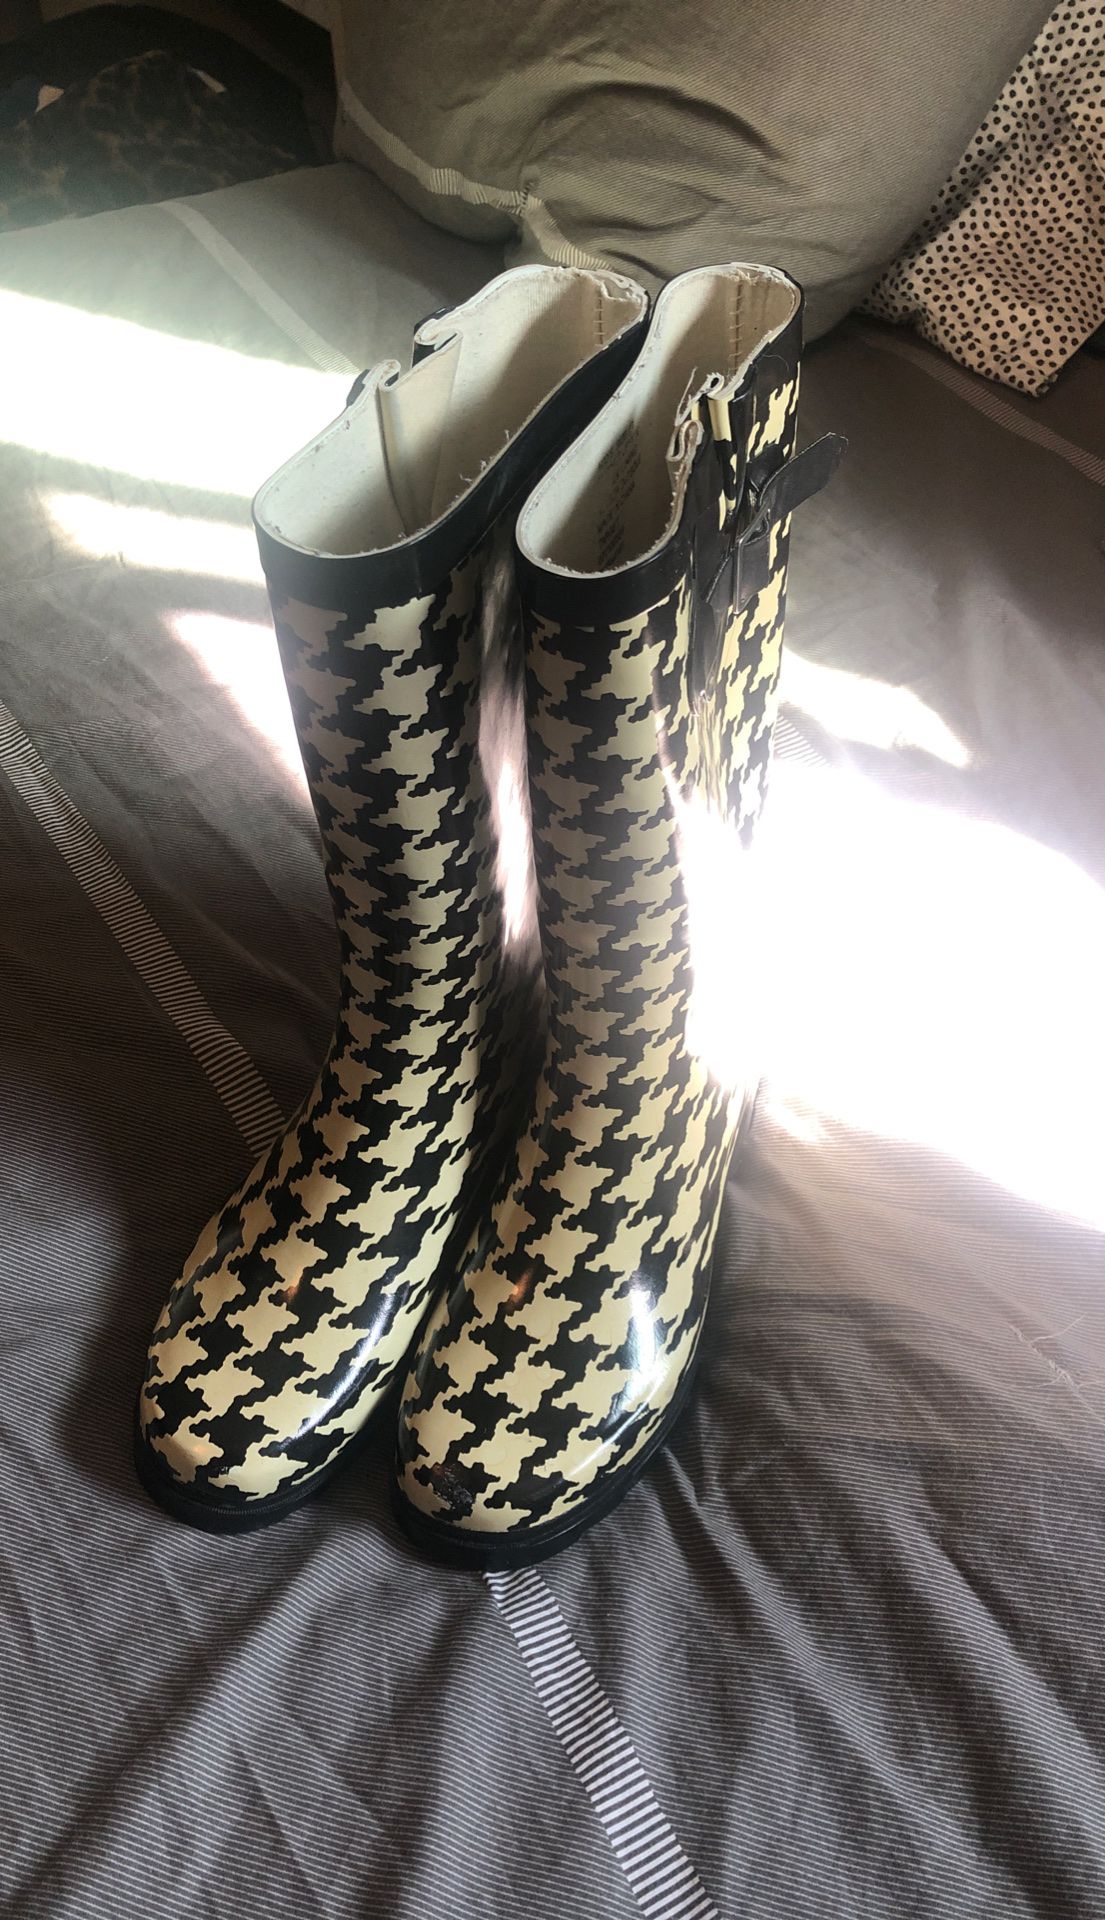 Rain boots size 7 for women